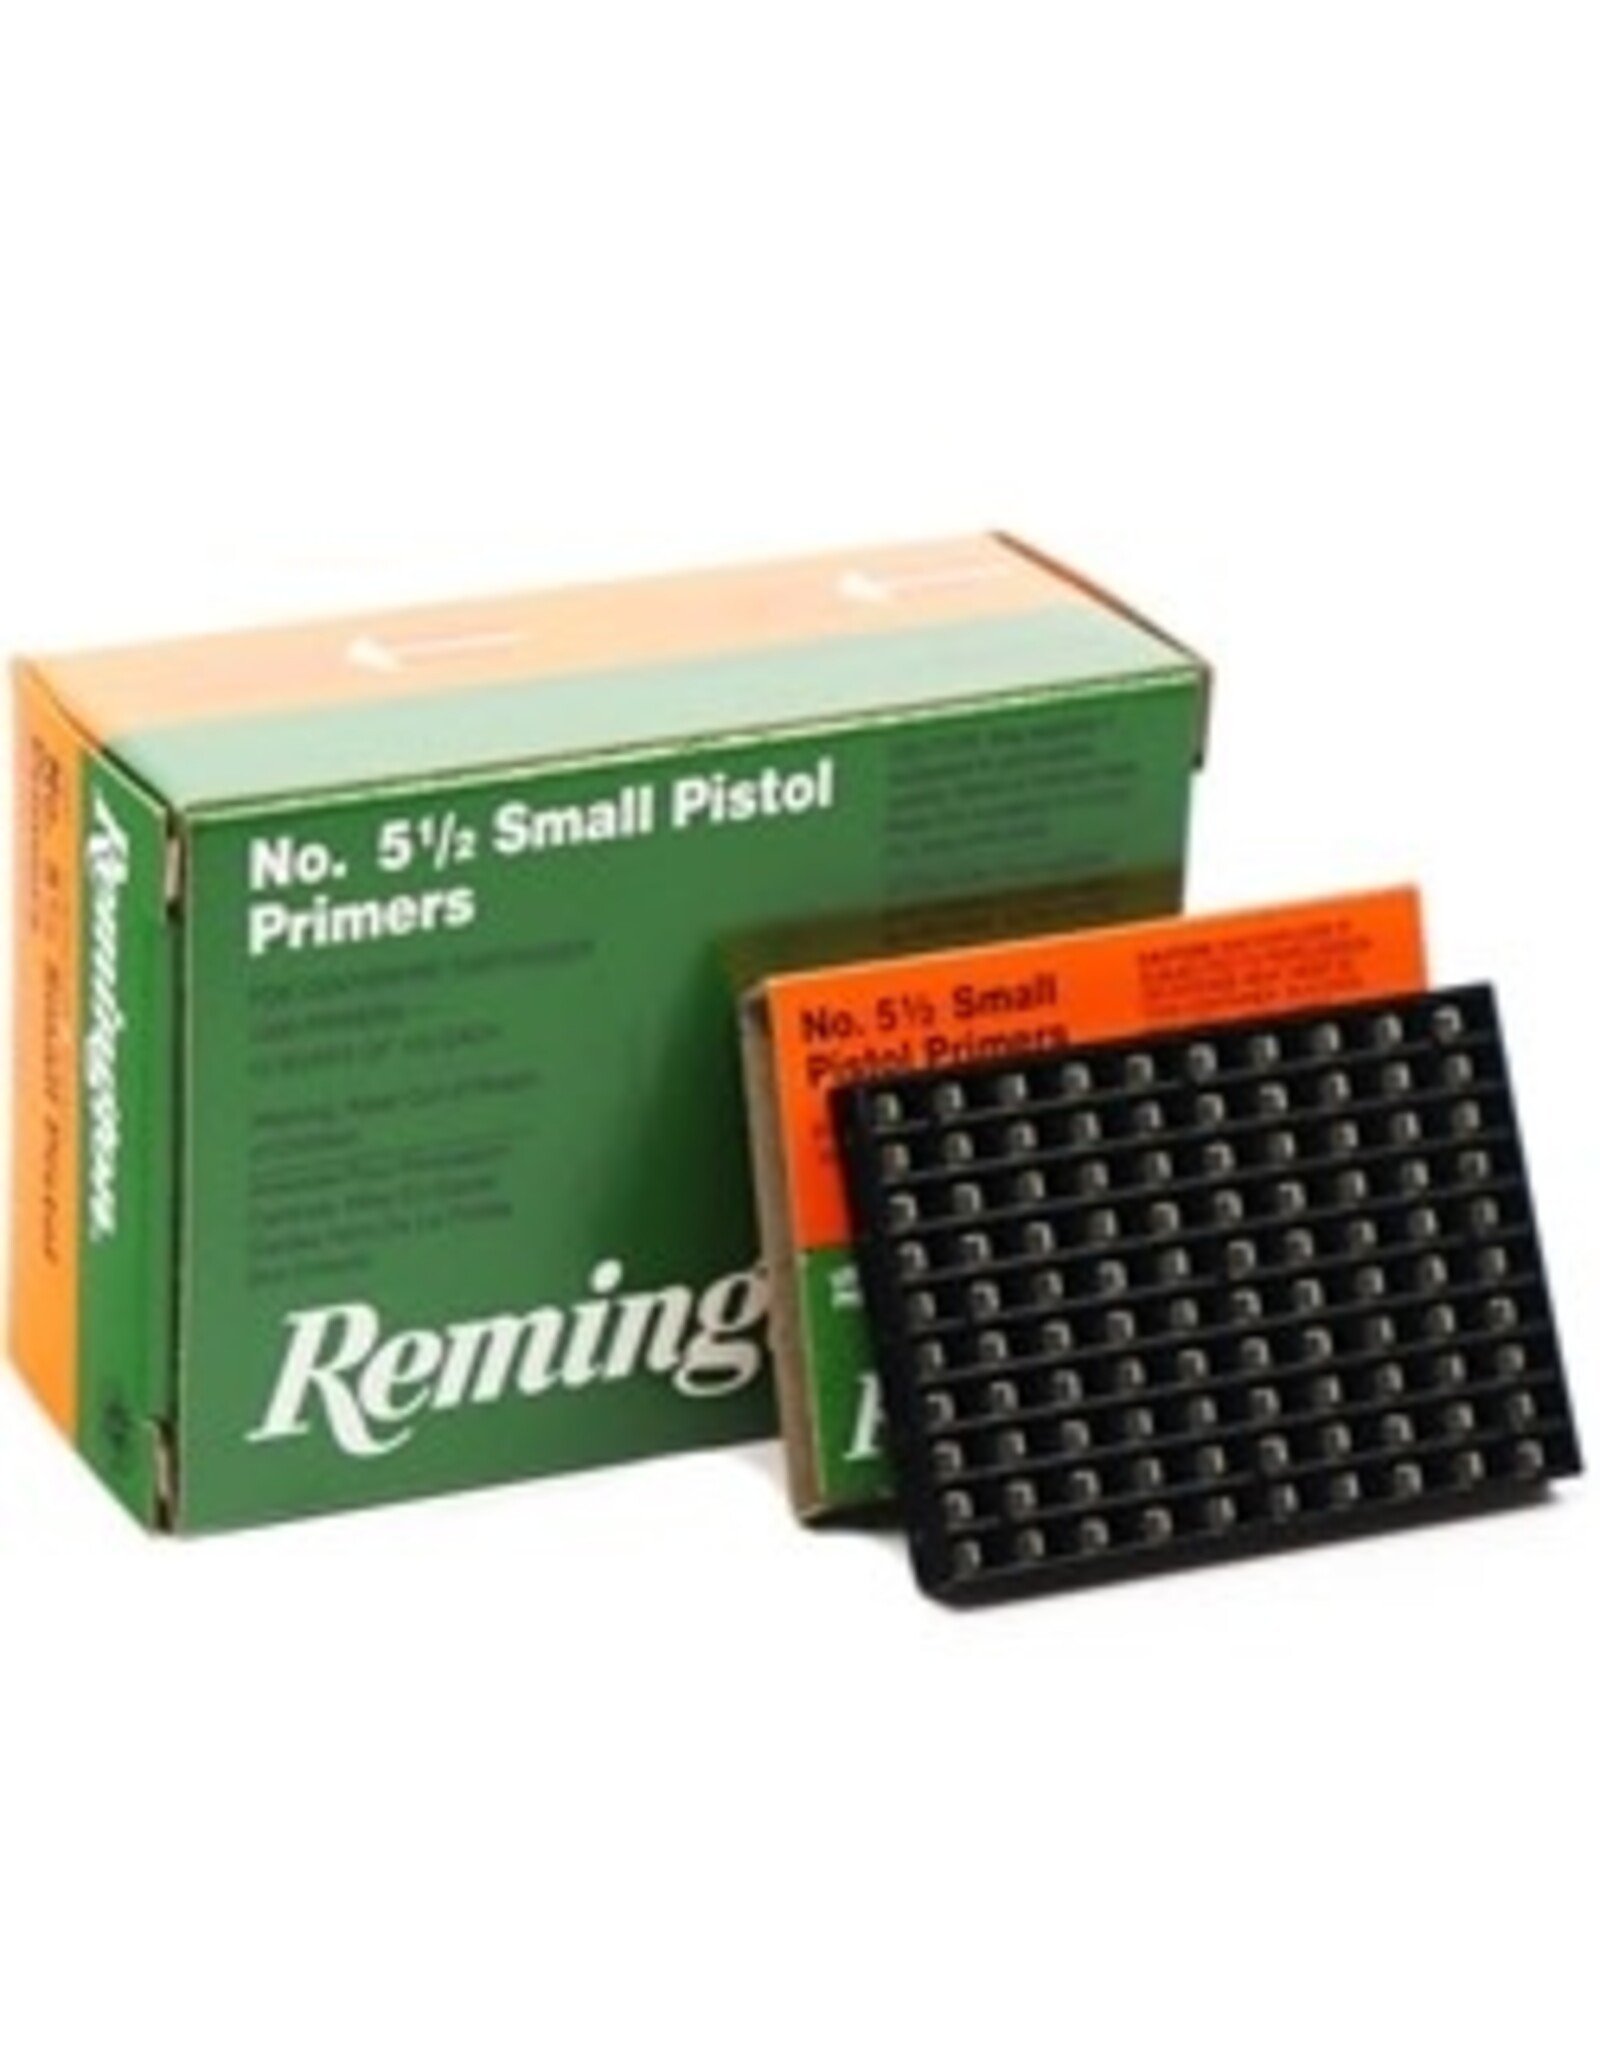 Remington No. 5-1/2 Small Pistol Primers - 100 Count